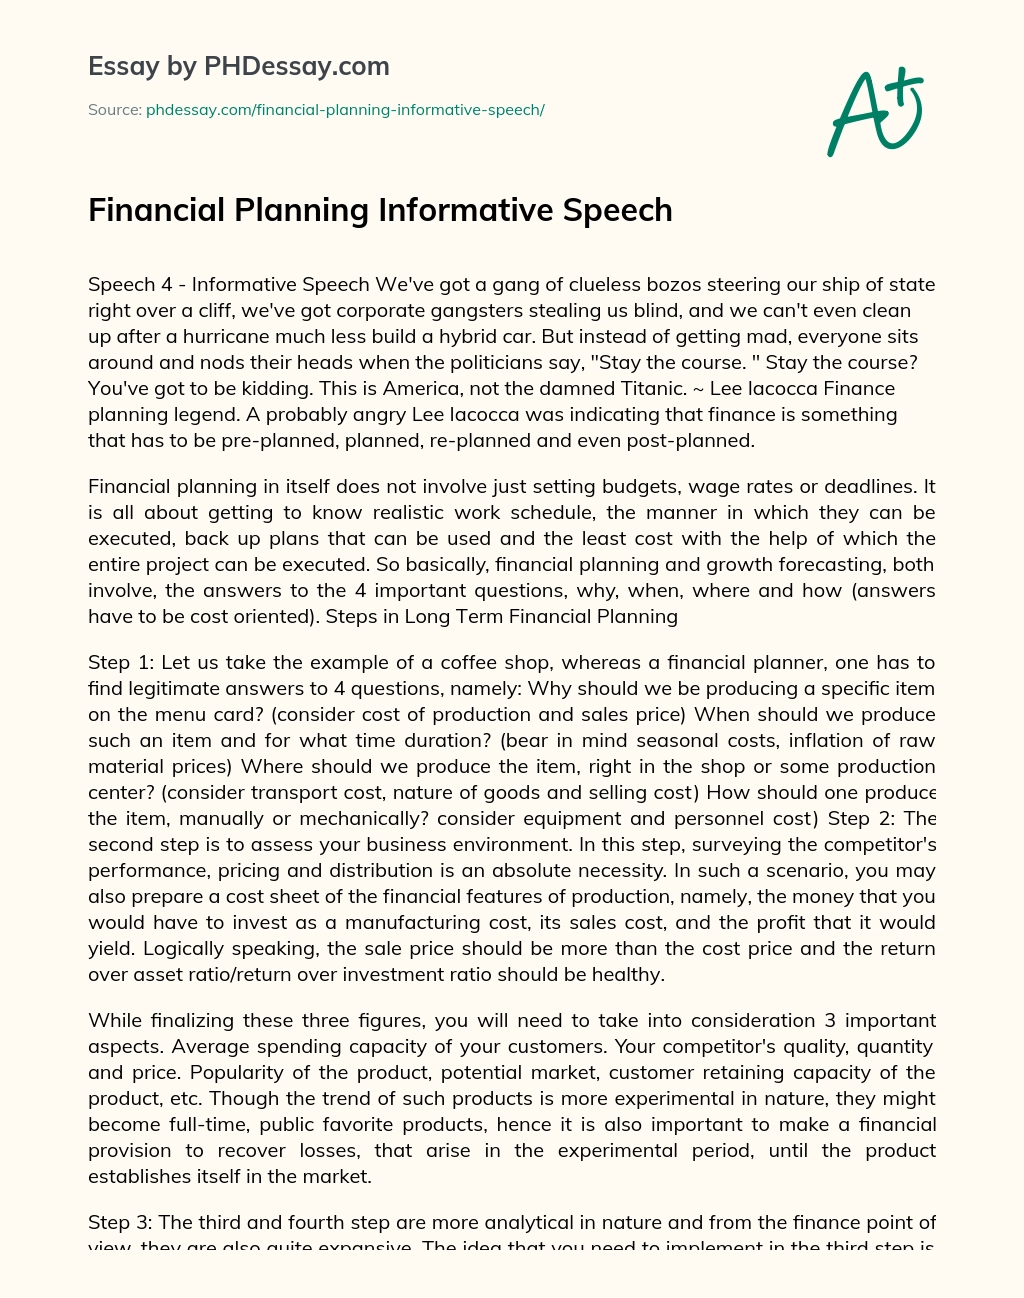 Financial Planning Informative Speech essay